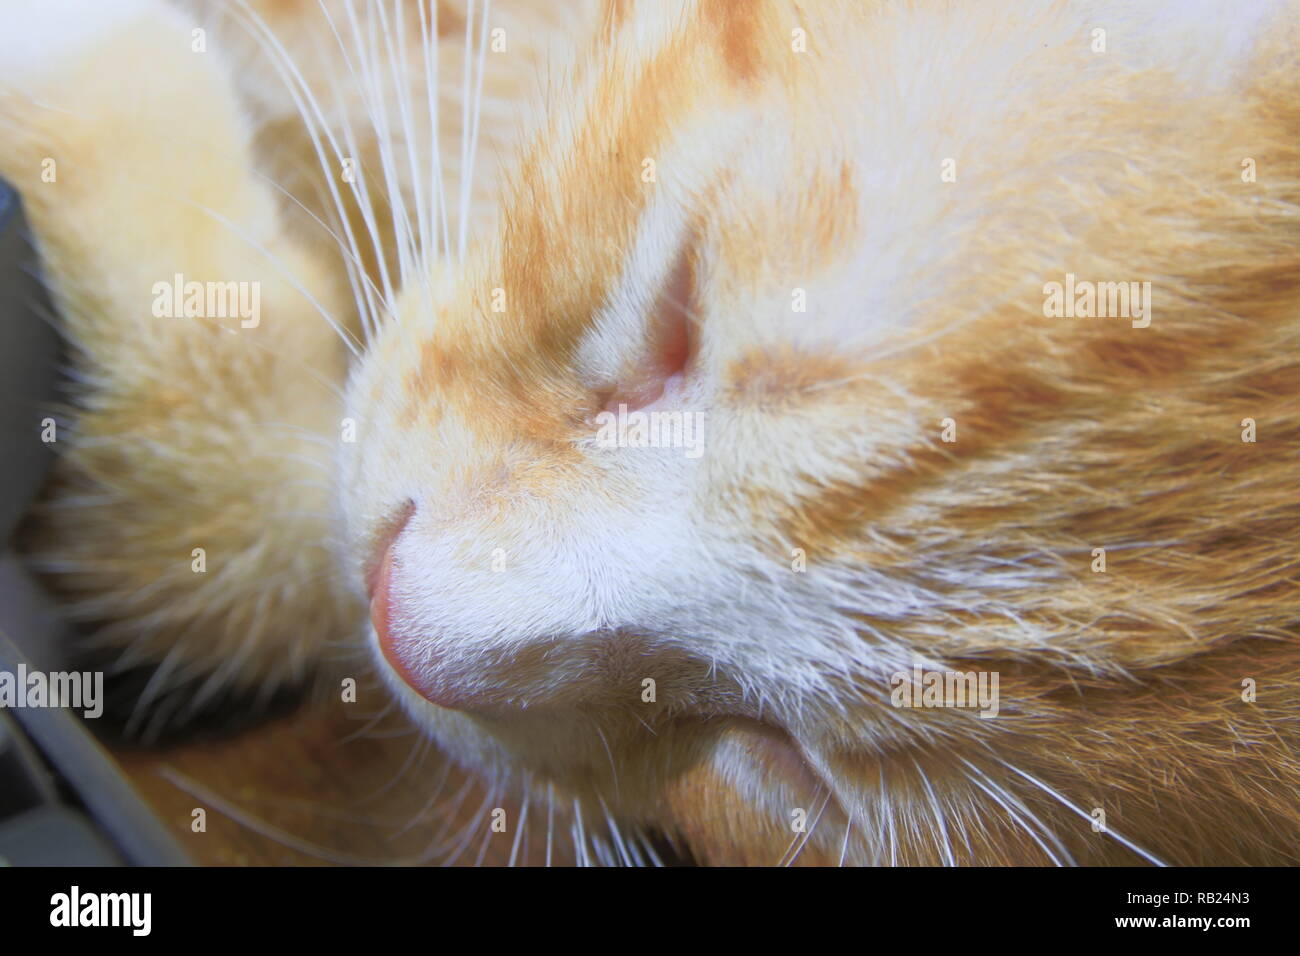 close up cat nose, kitten orange relax sleeping Stock Photo